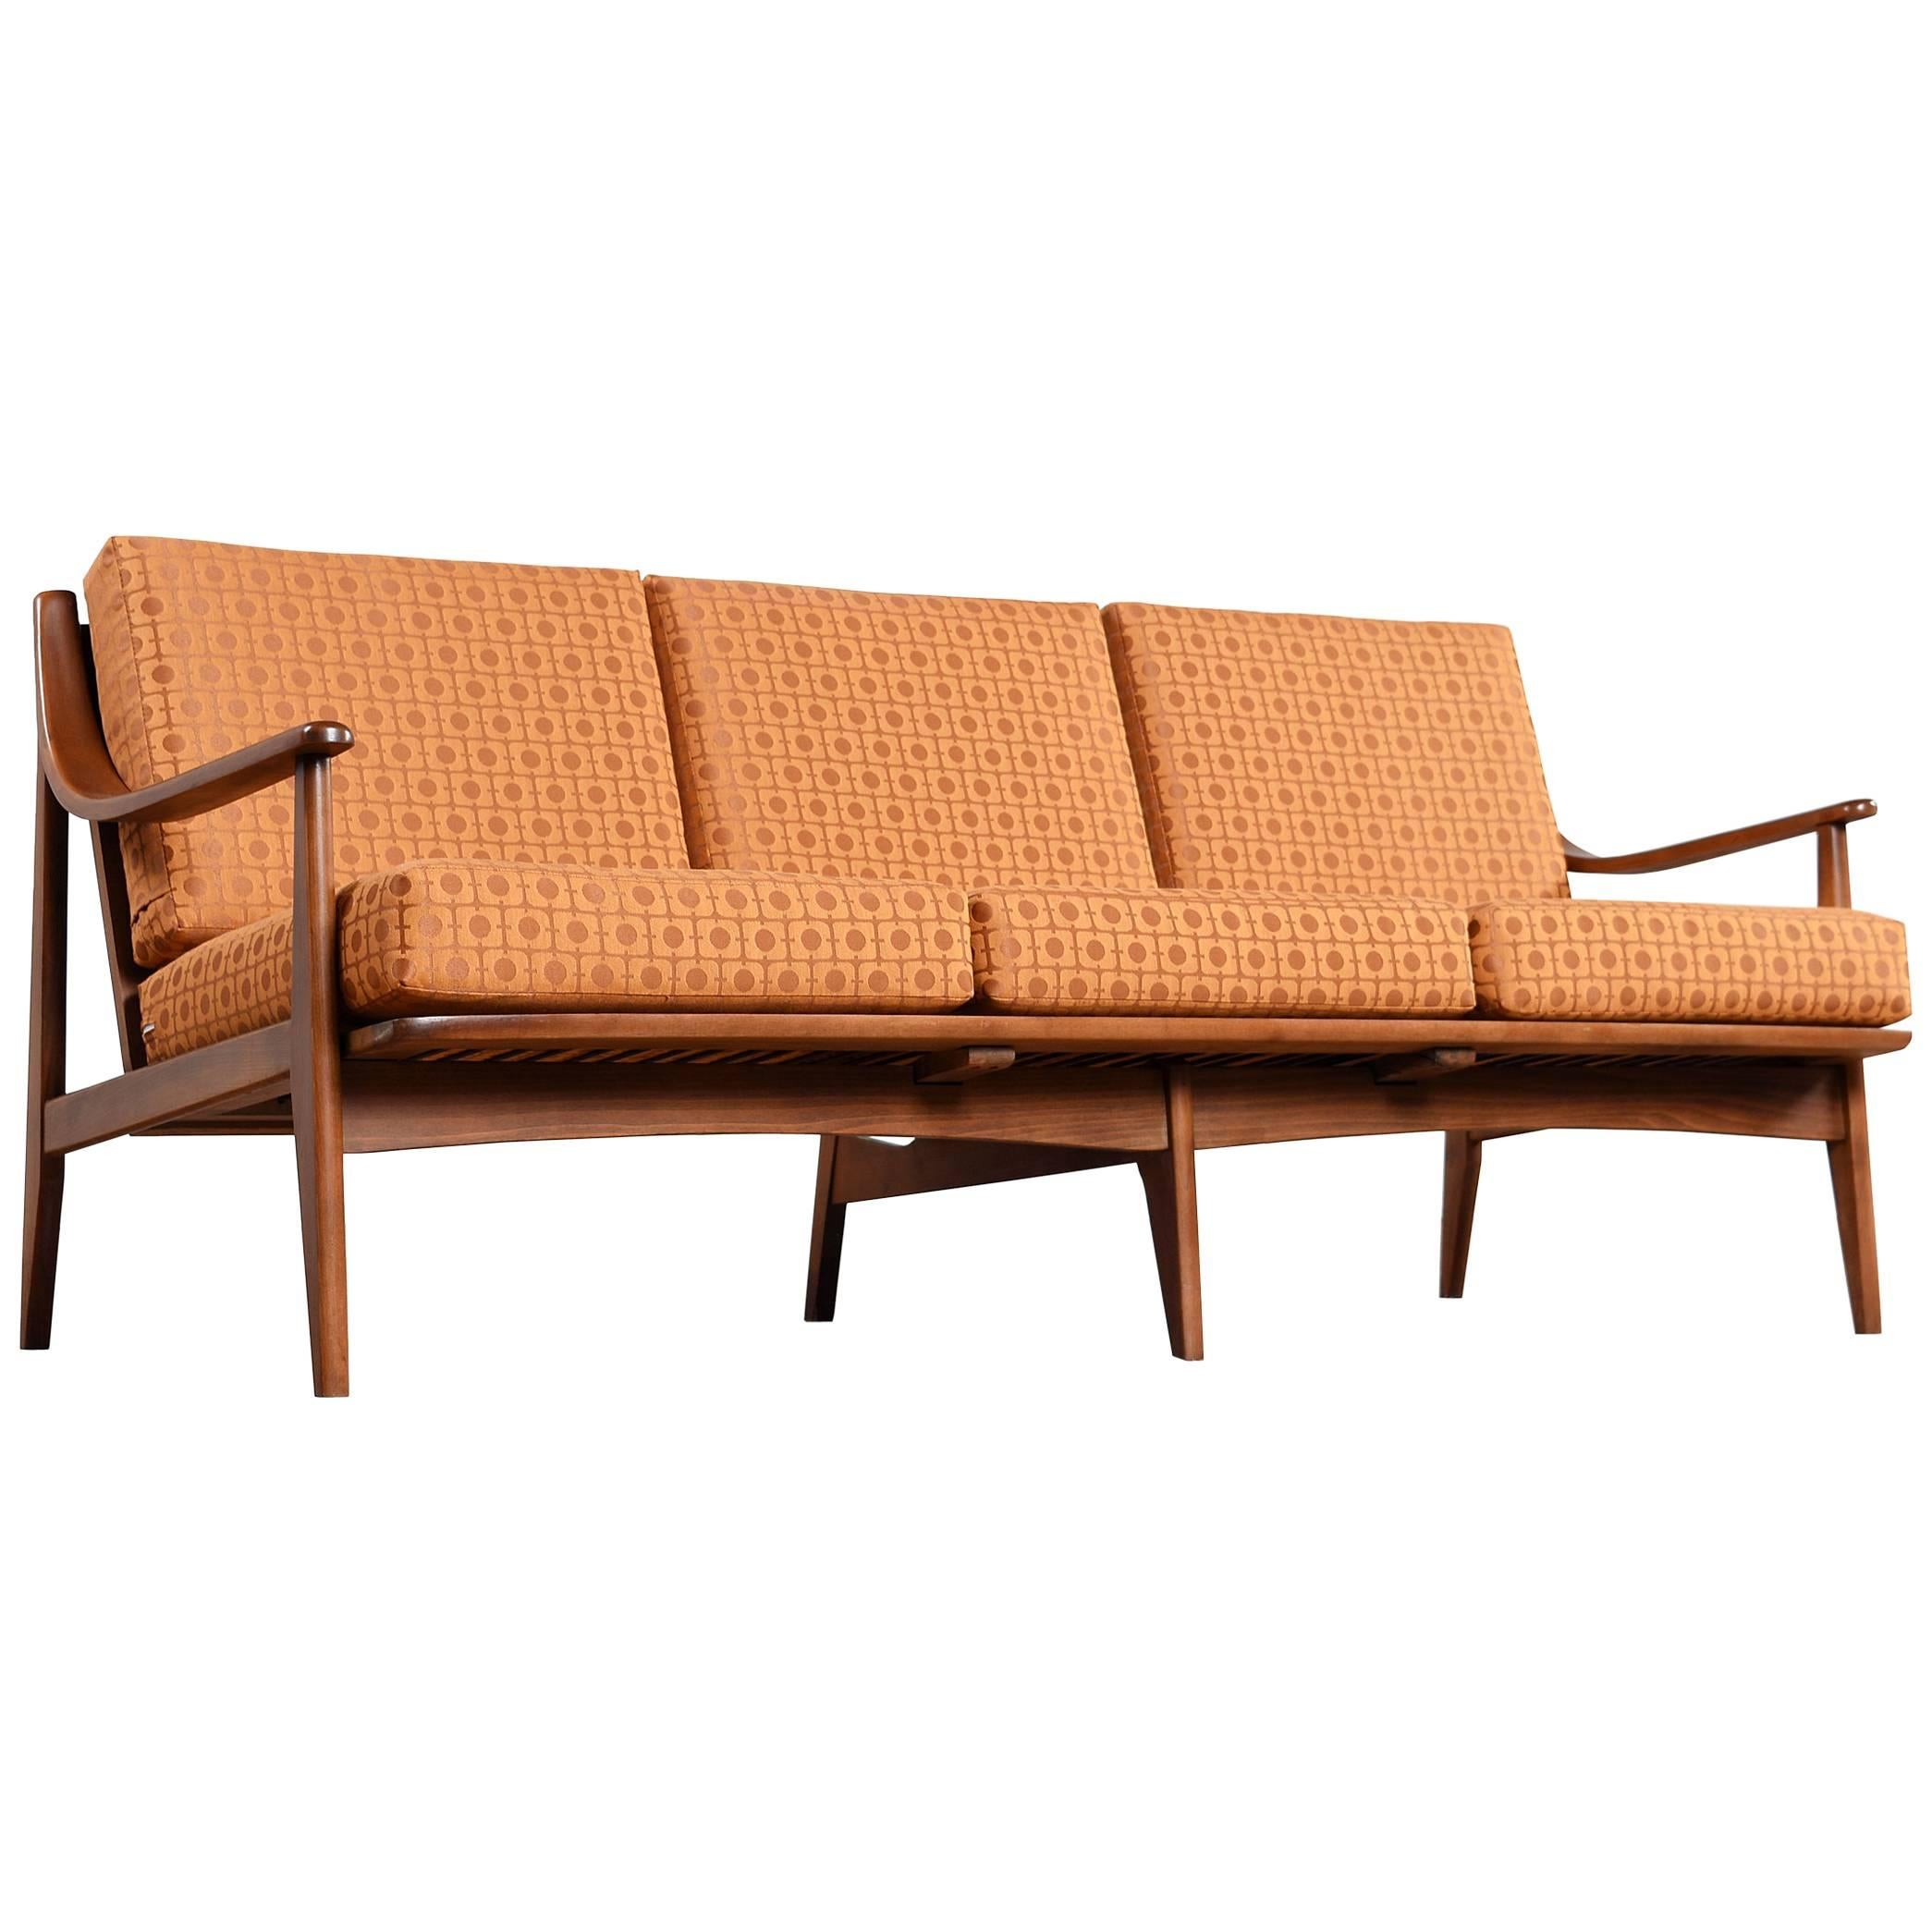 Restored Mid-Century Modern Sofa in Burnt Orange